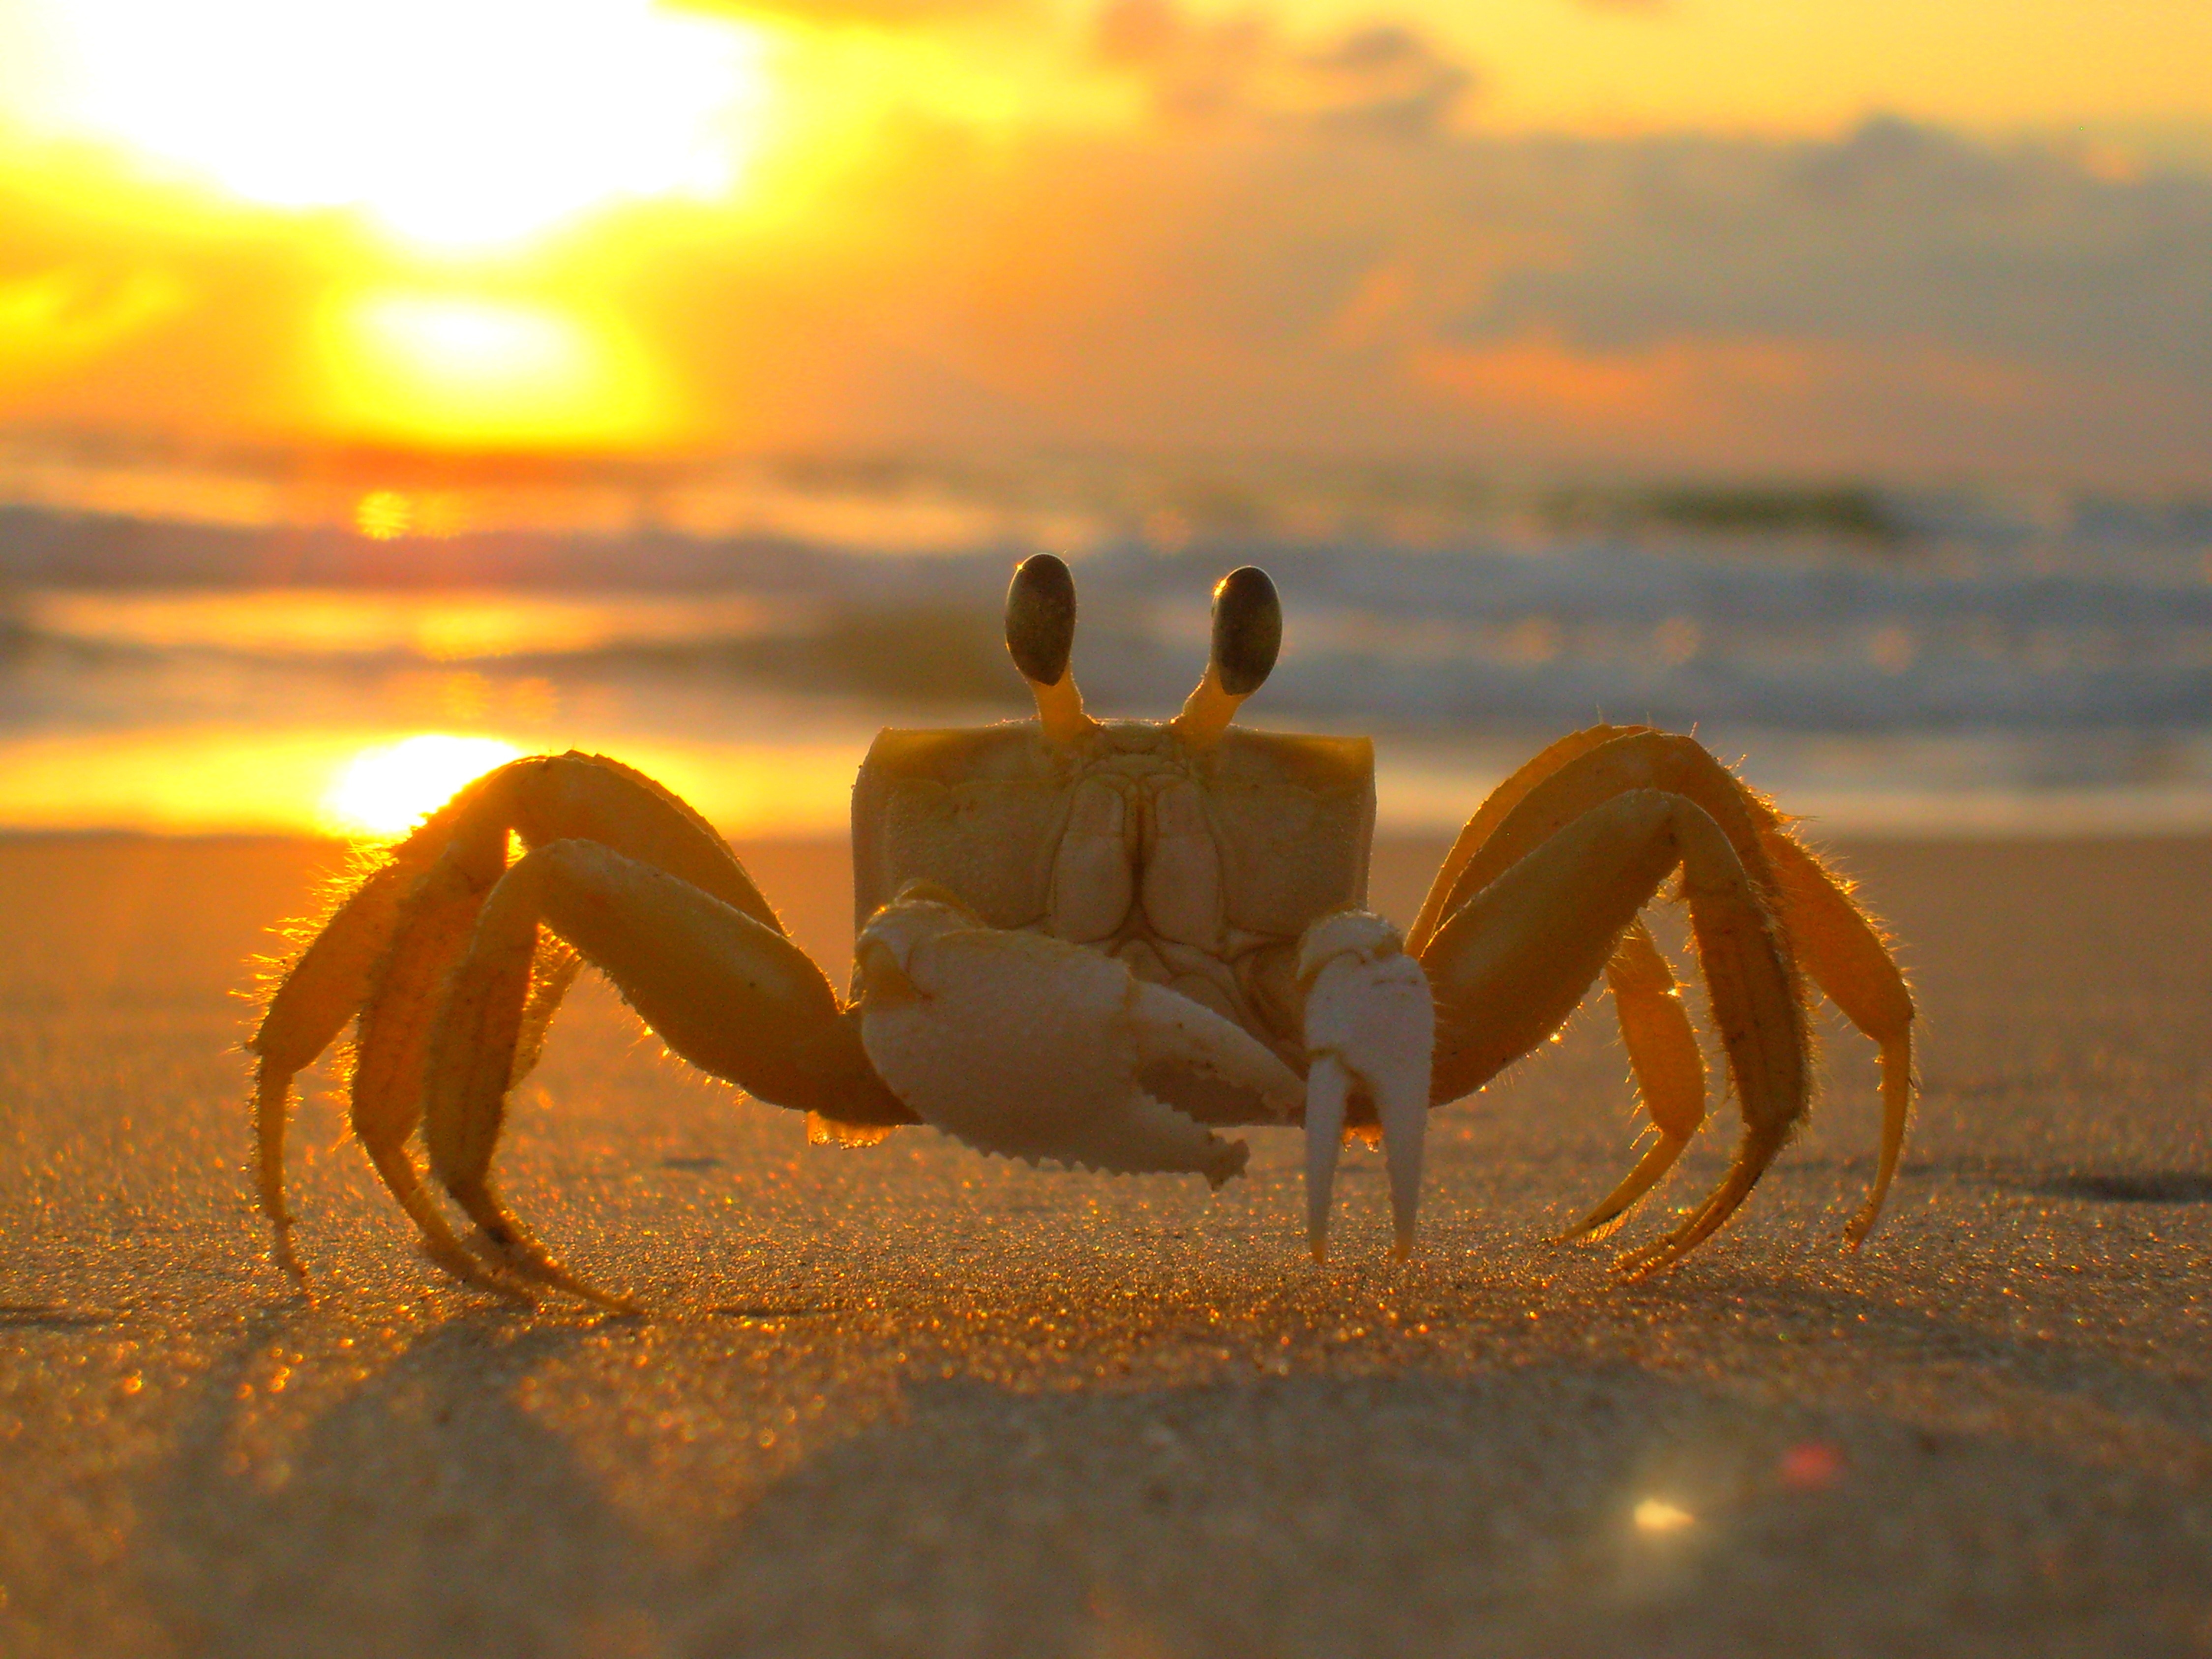 orange crab on beach during sunset